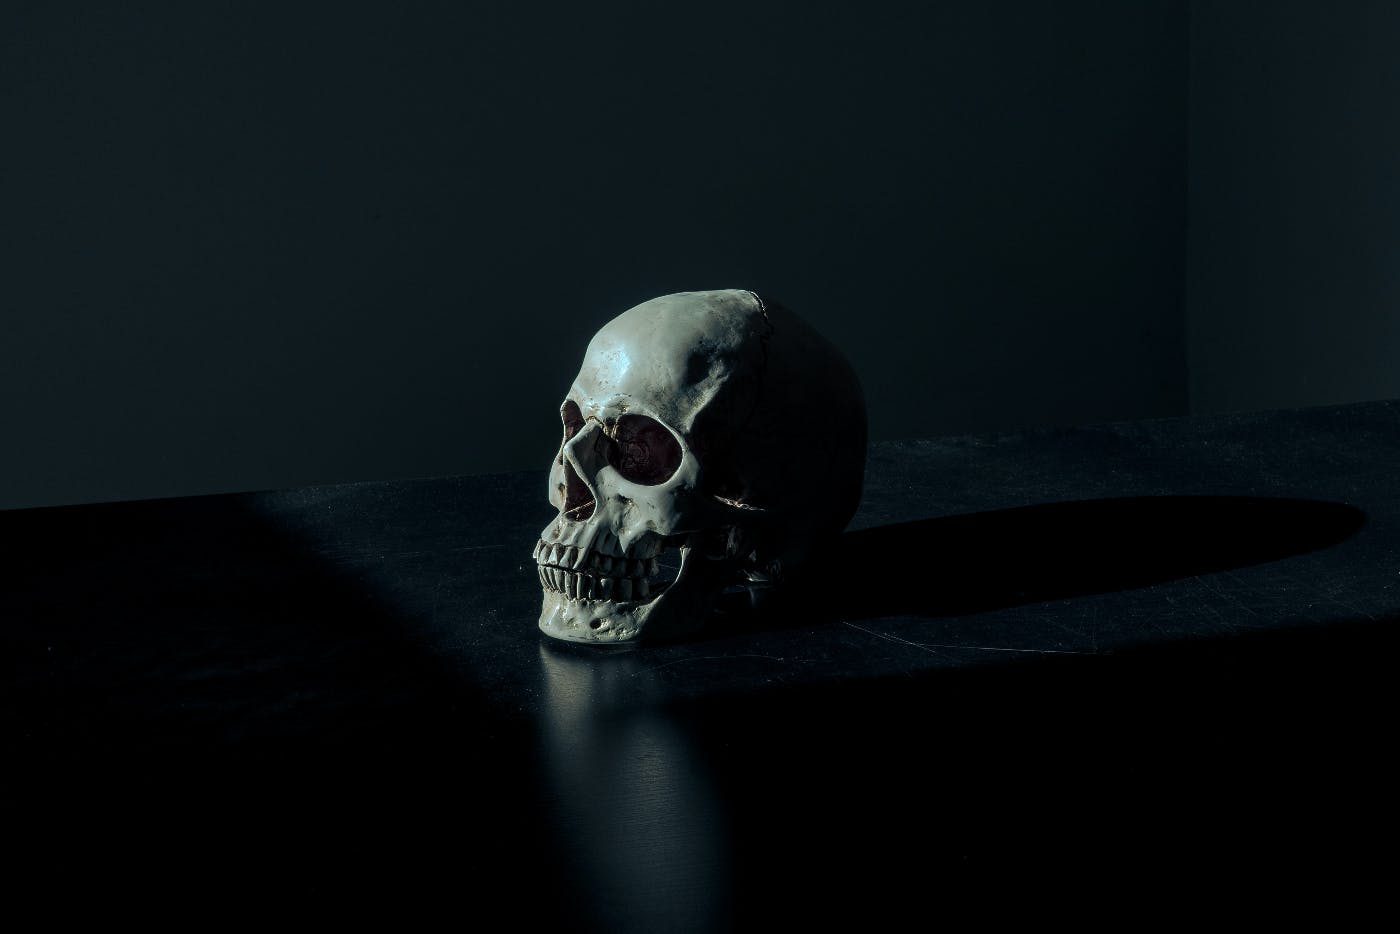 A human skull sitting on a black desk